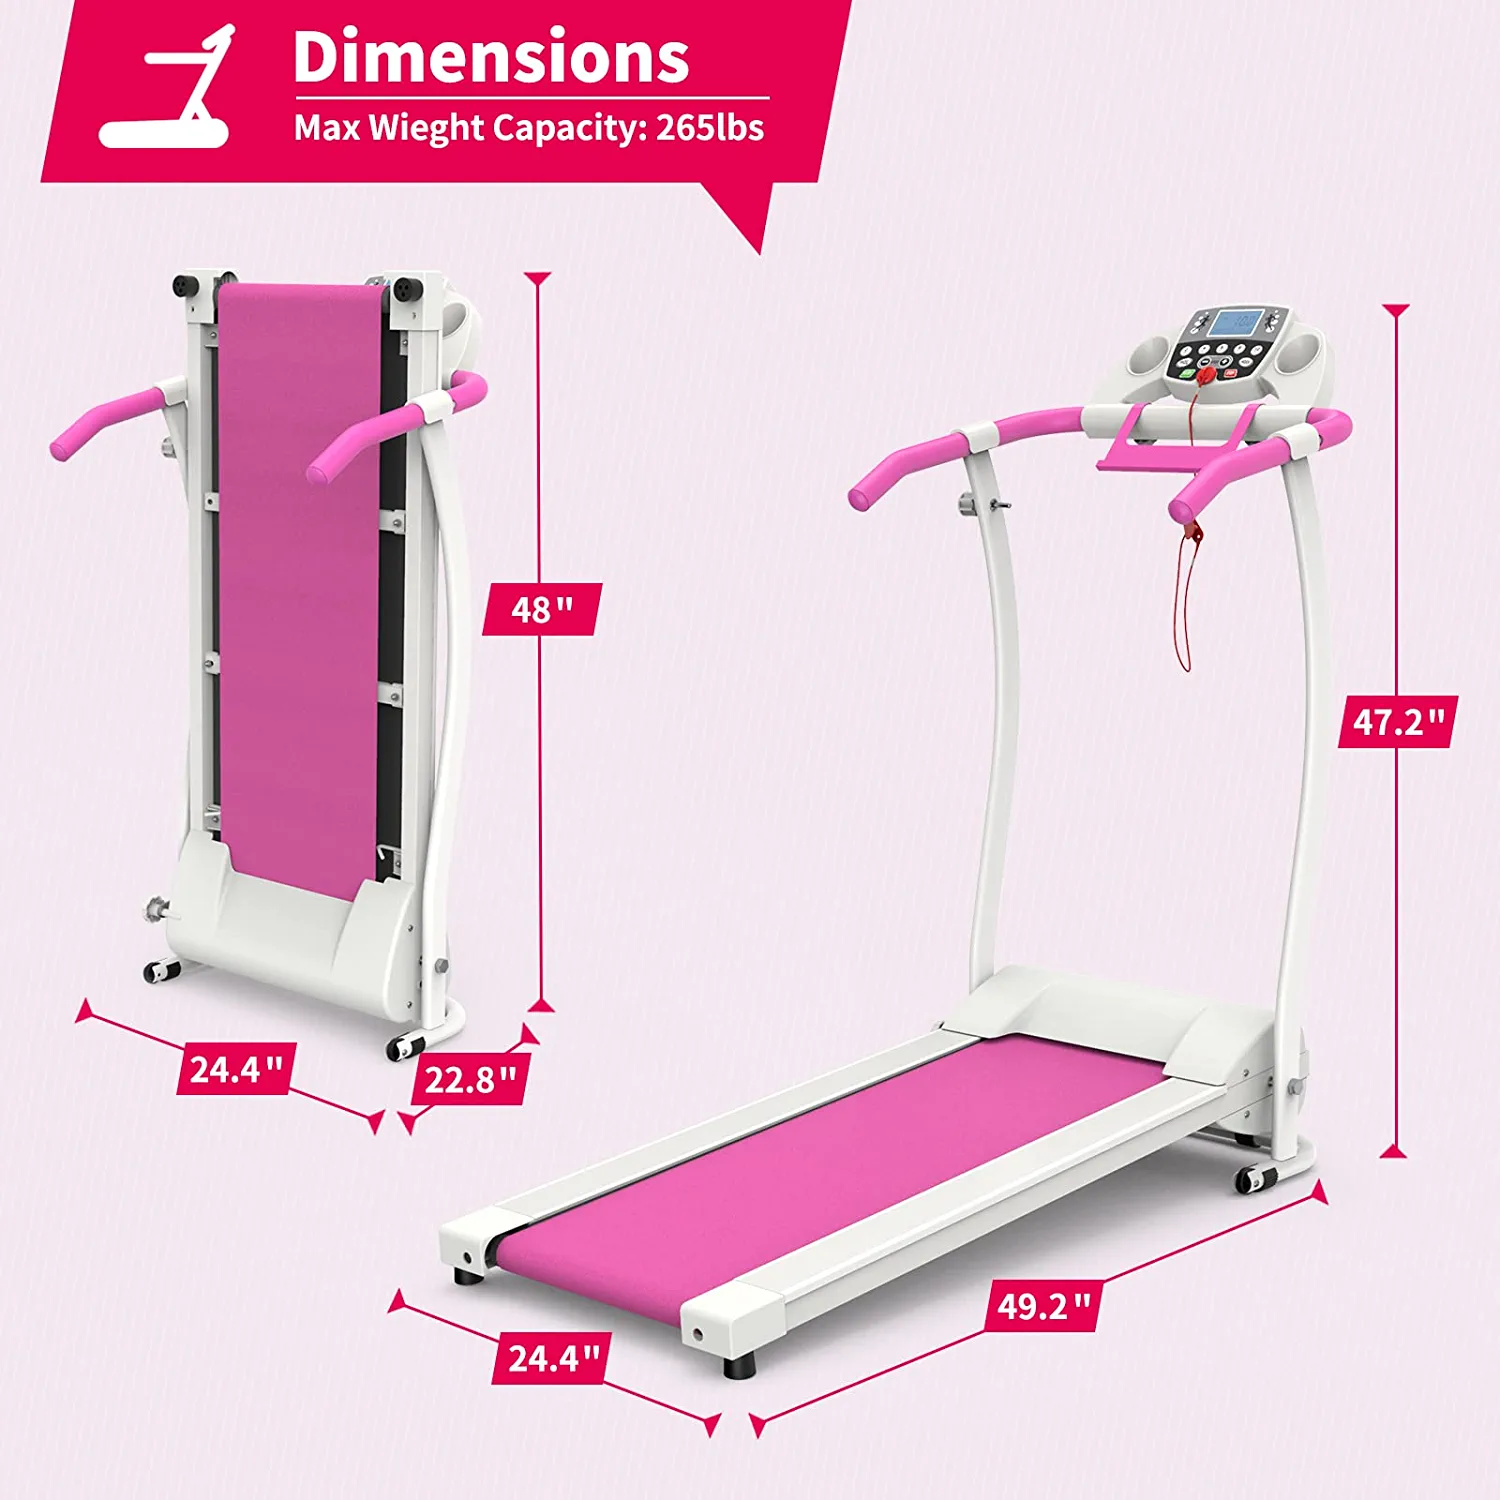 Fophet Foldable Treadmill dimensions